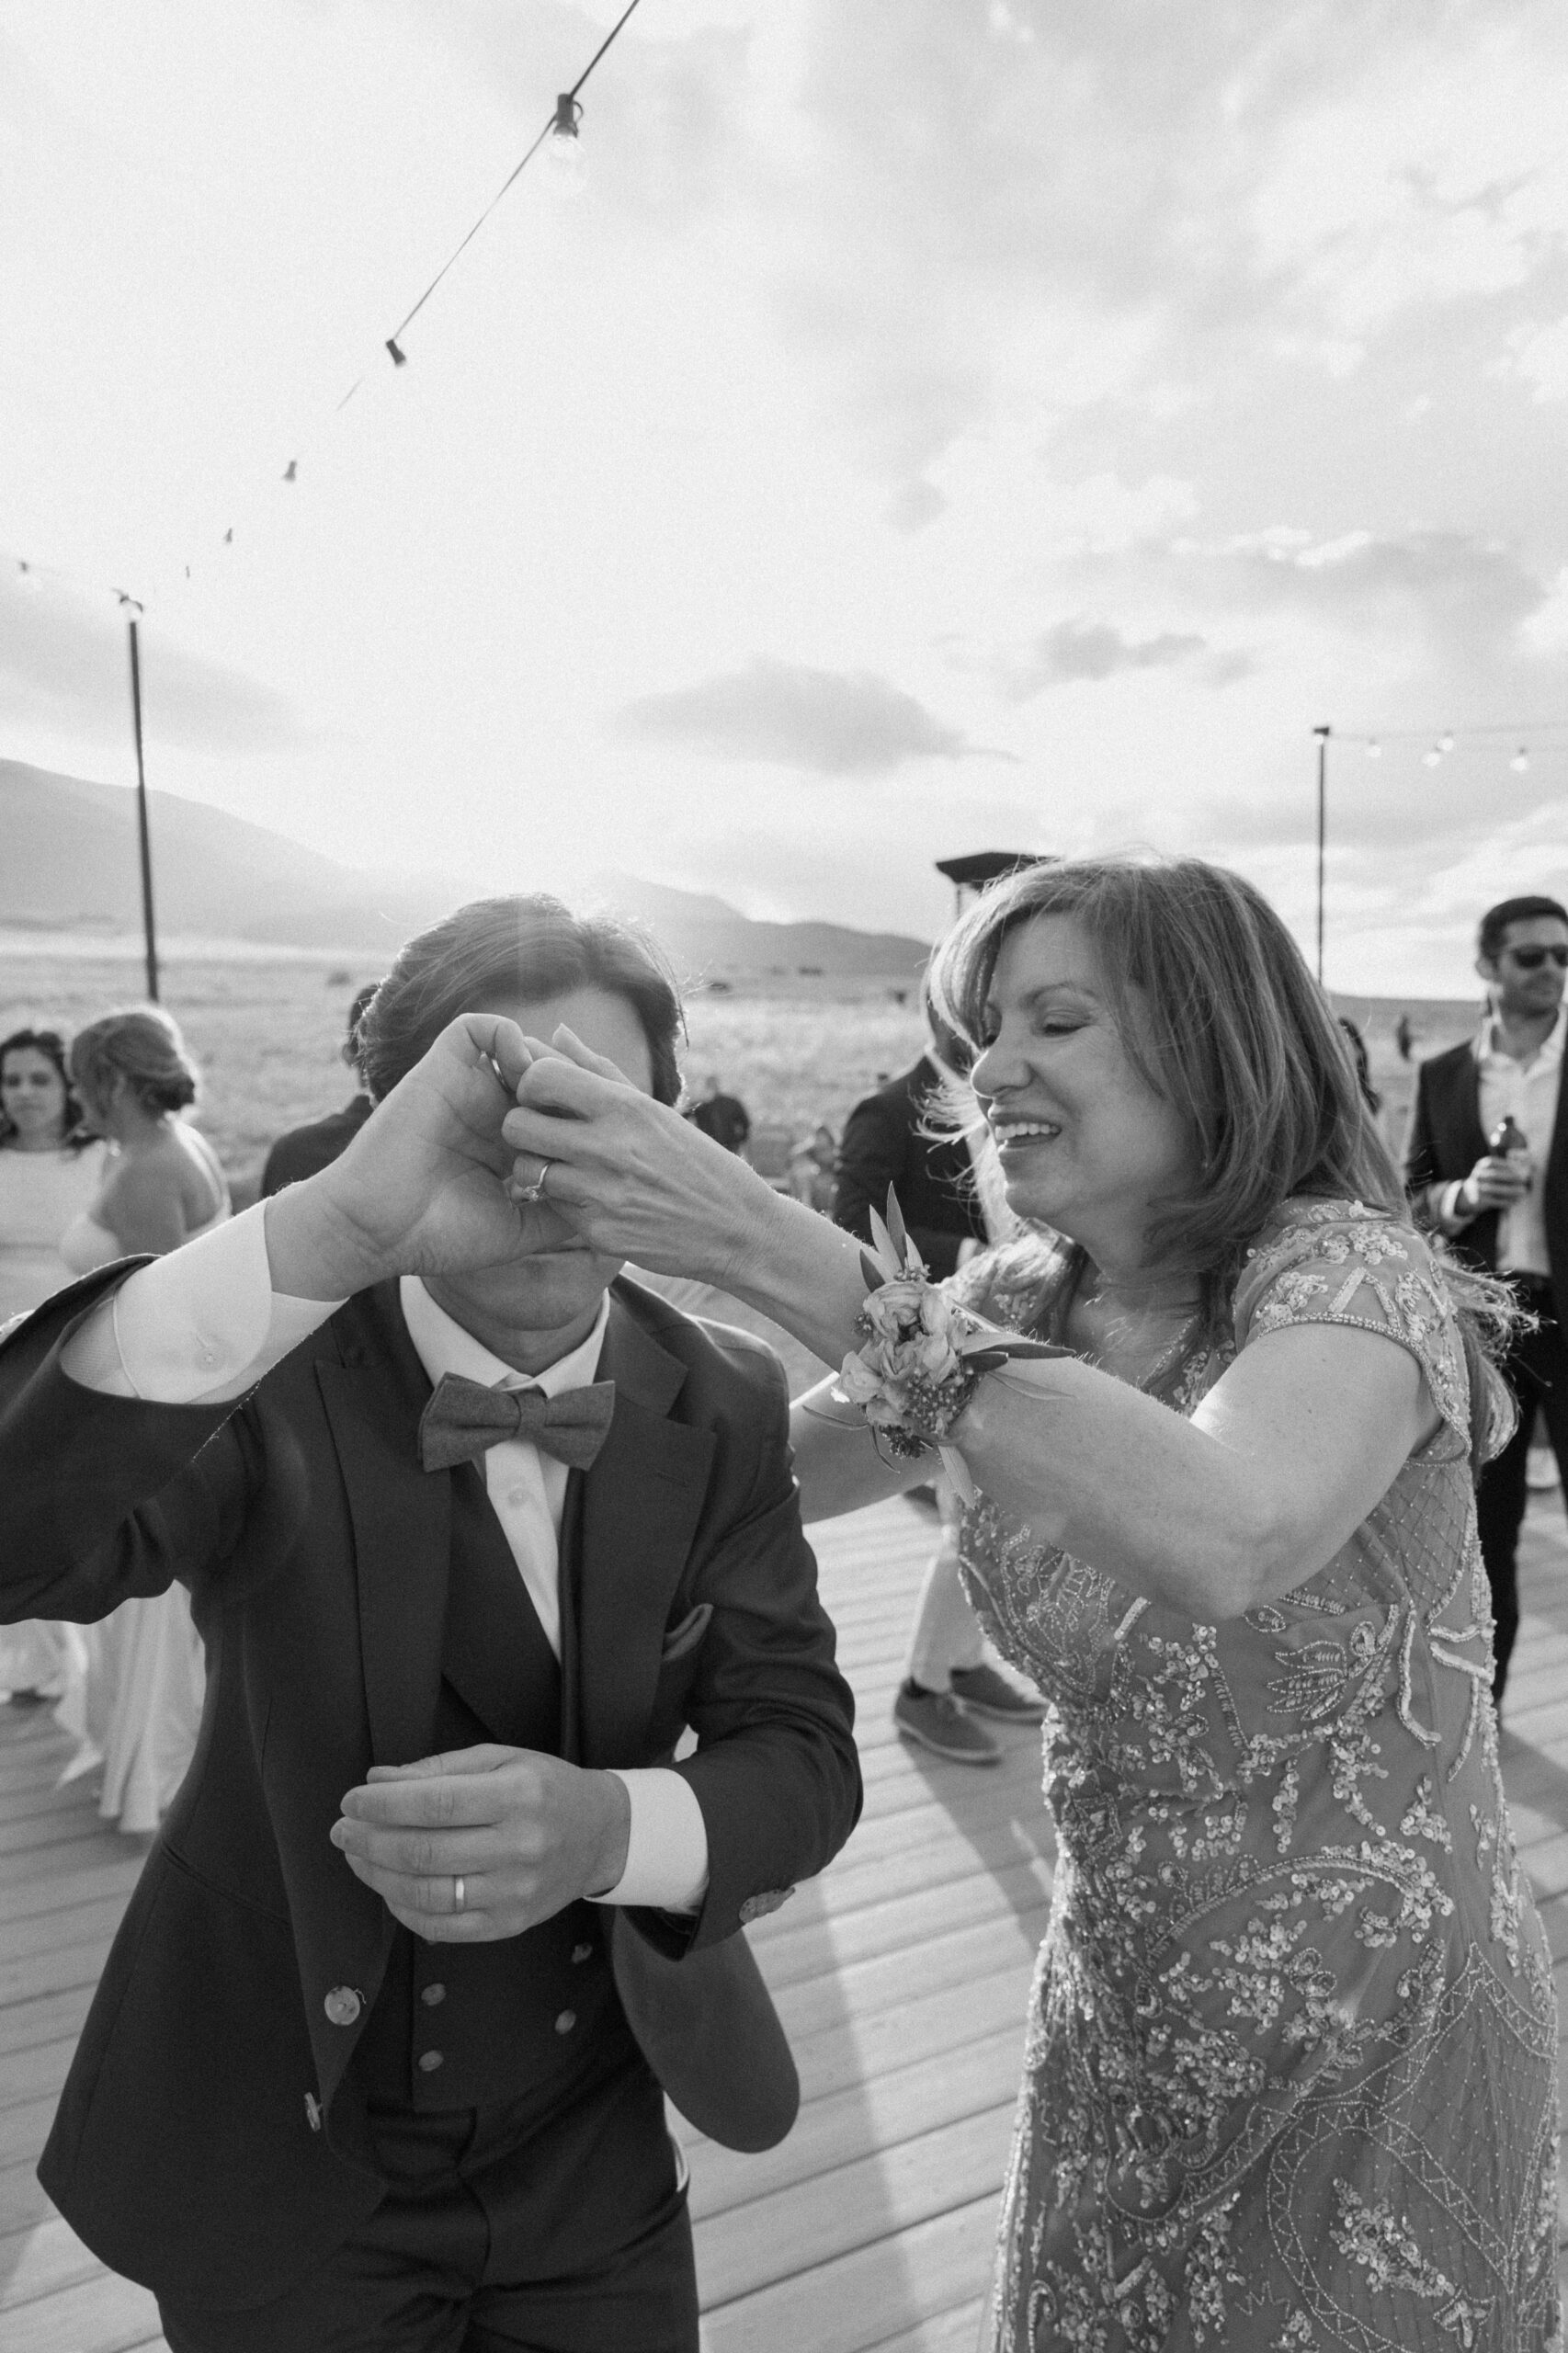 A lively wedding reception. Photo by Colorado wedding photographer Ashley Joyce.